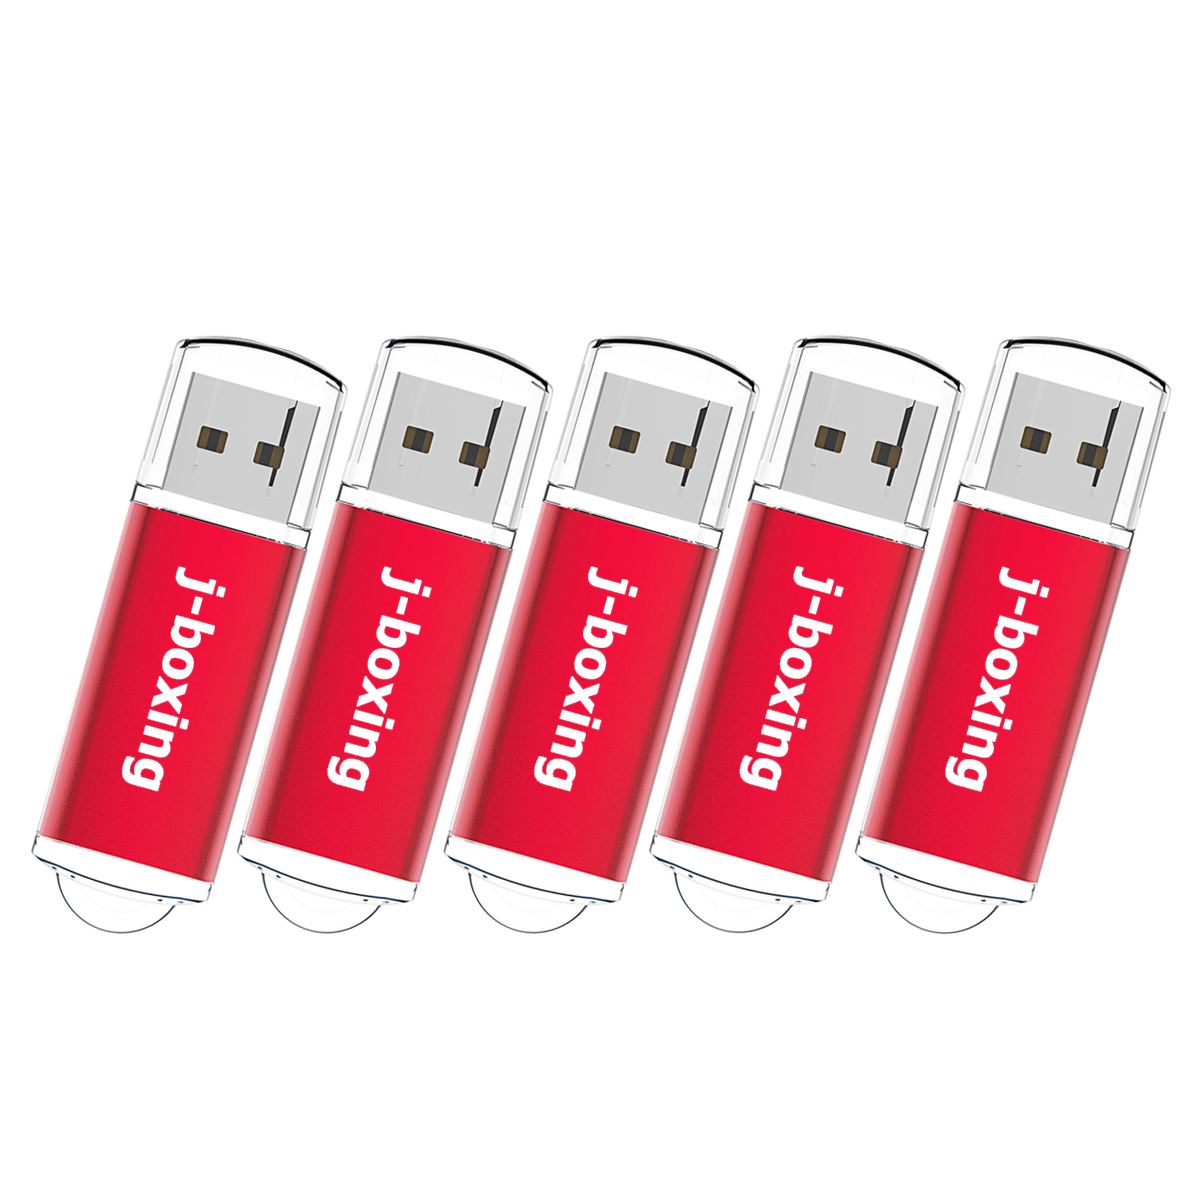 Red 5PCS/LOT Rectangle USB 2.0 Flash Drive Flash Pen Drive High Speed Memory Stick Storage 1G 2G 4G 8G 16G 32G 64G for PC Laptop Thumb Pen